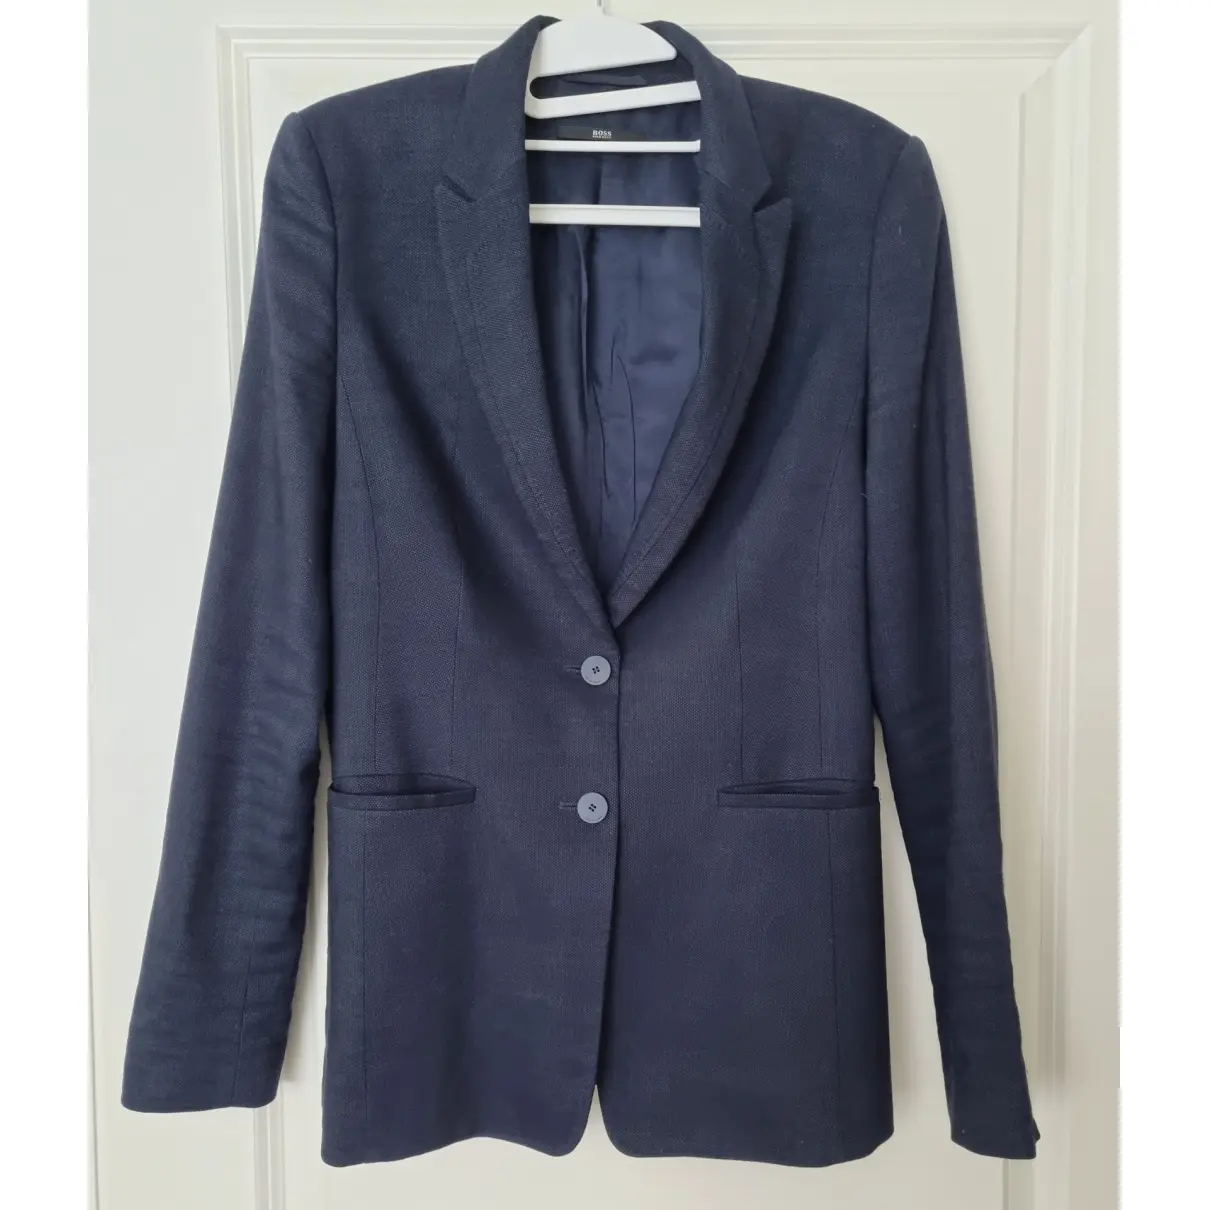 Buy Boss Wool suit jacket online